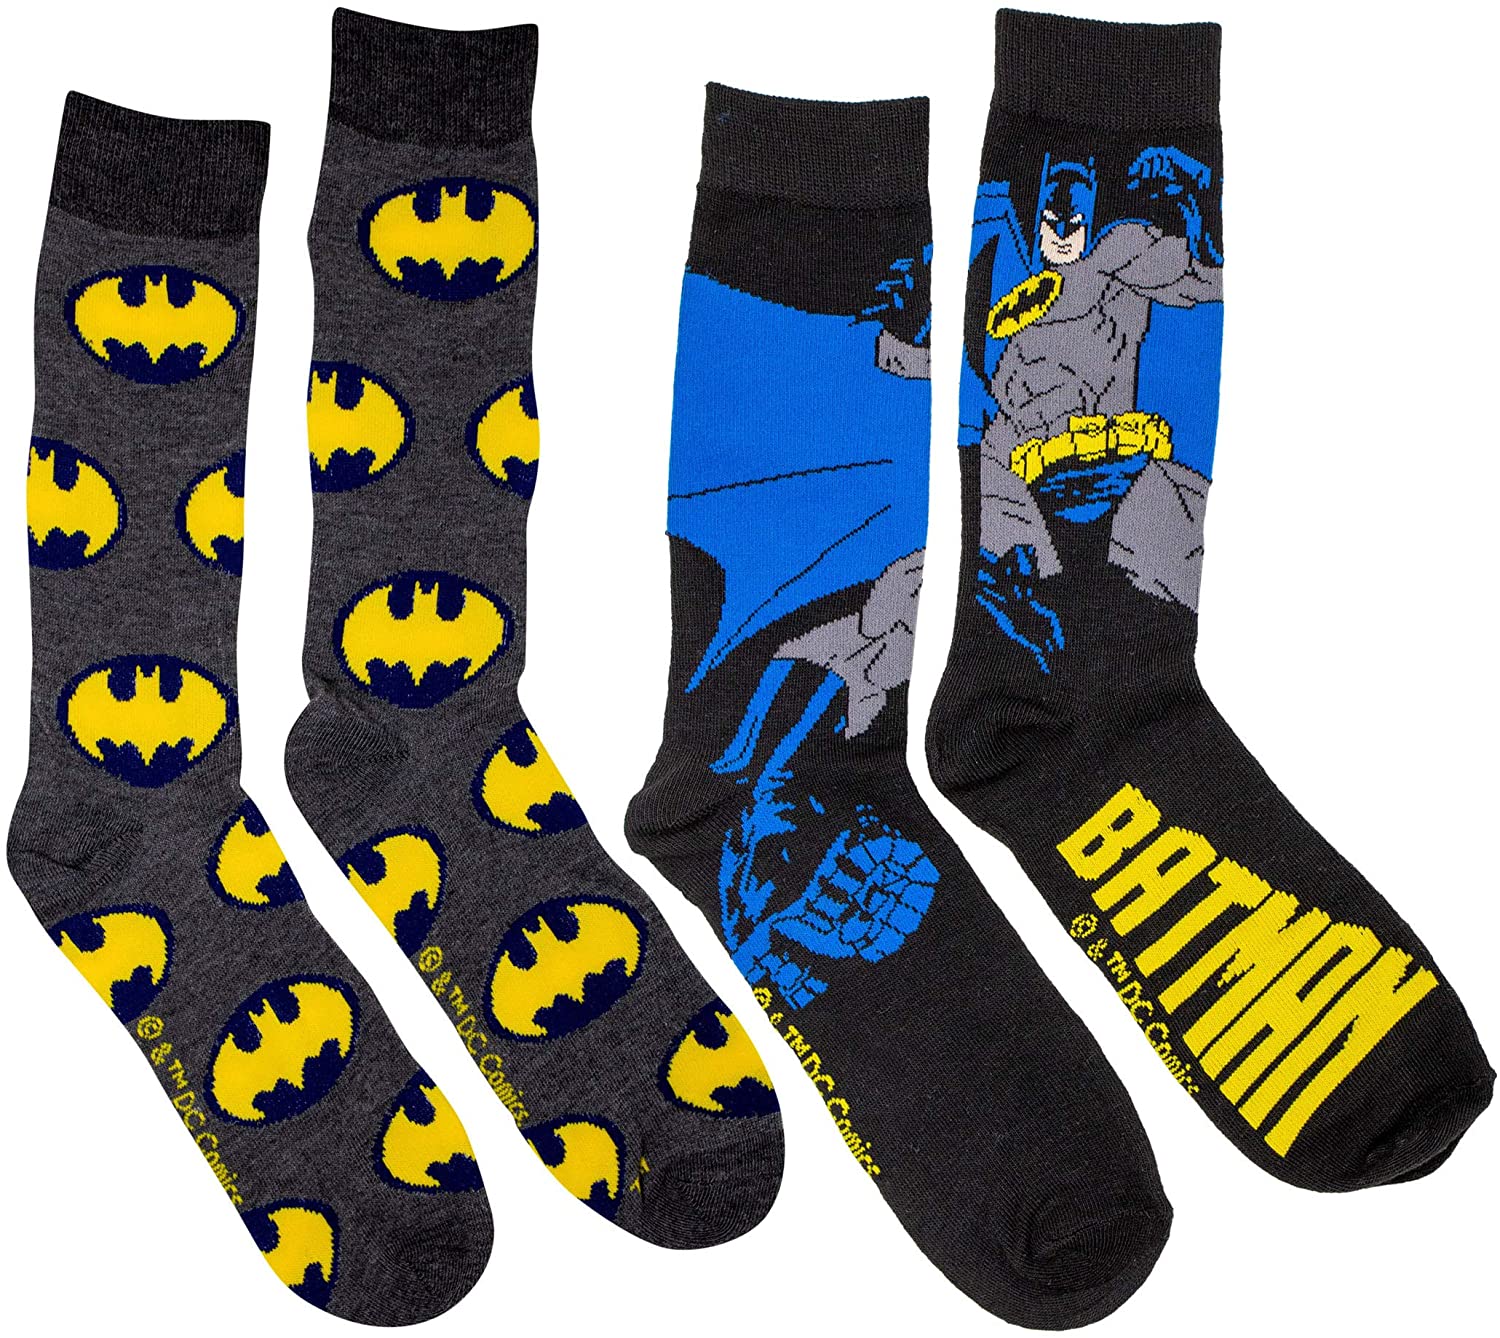 Batman Action Pose and Symbols 2-Pack Crew Socks